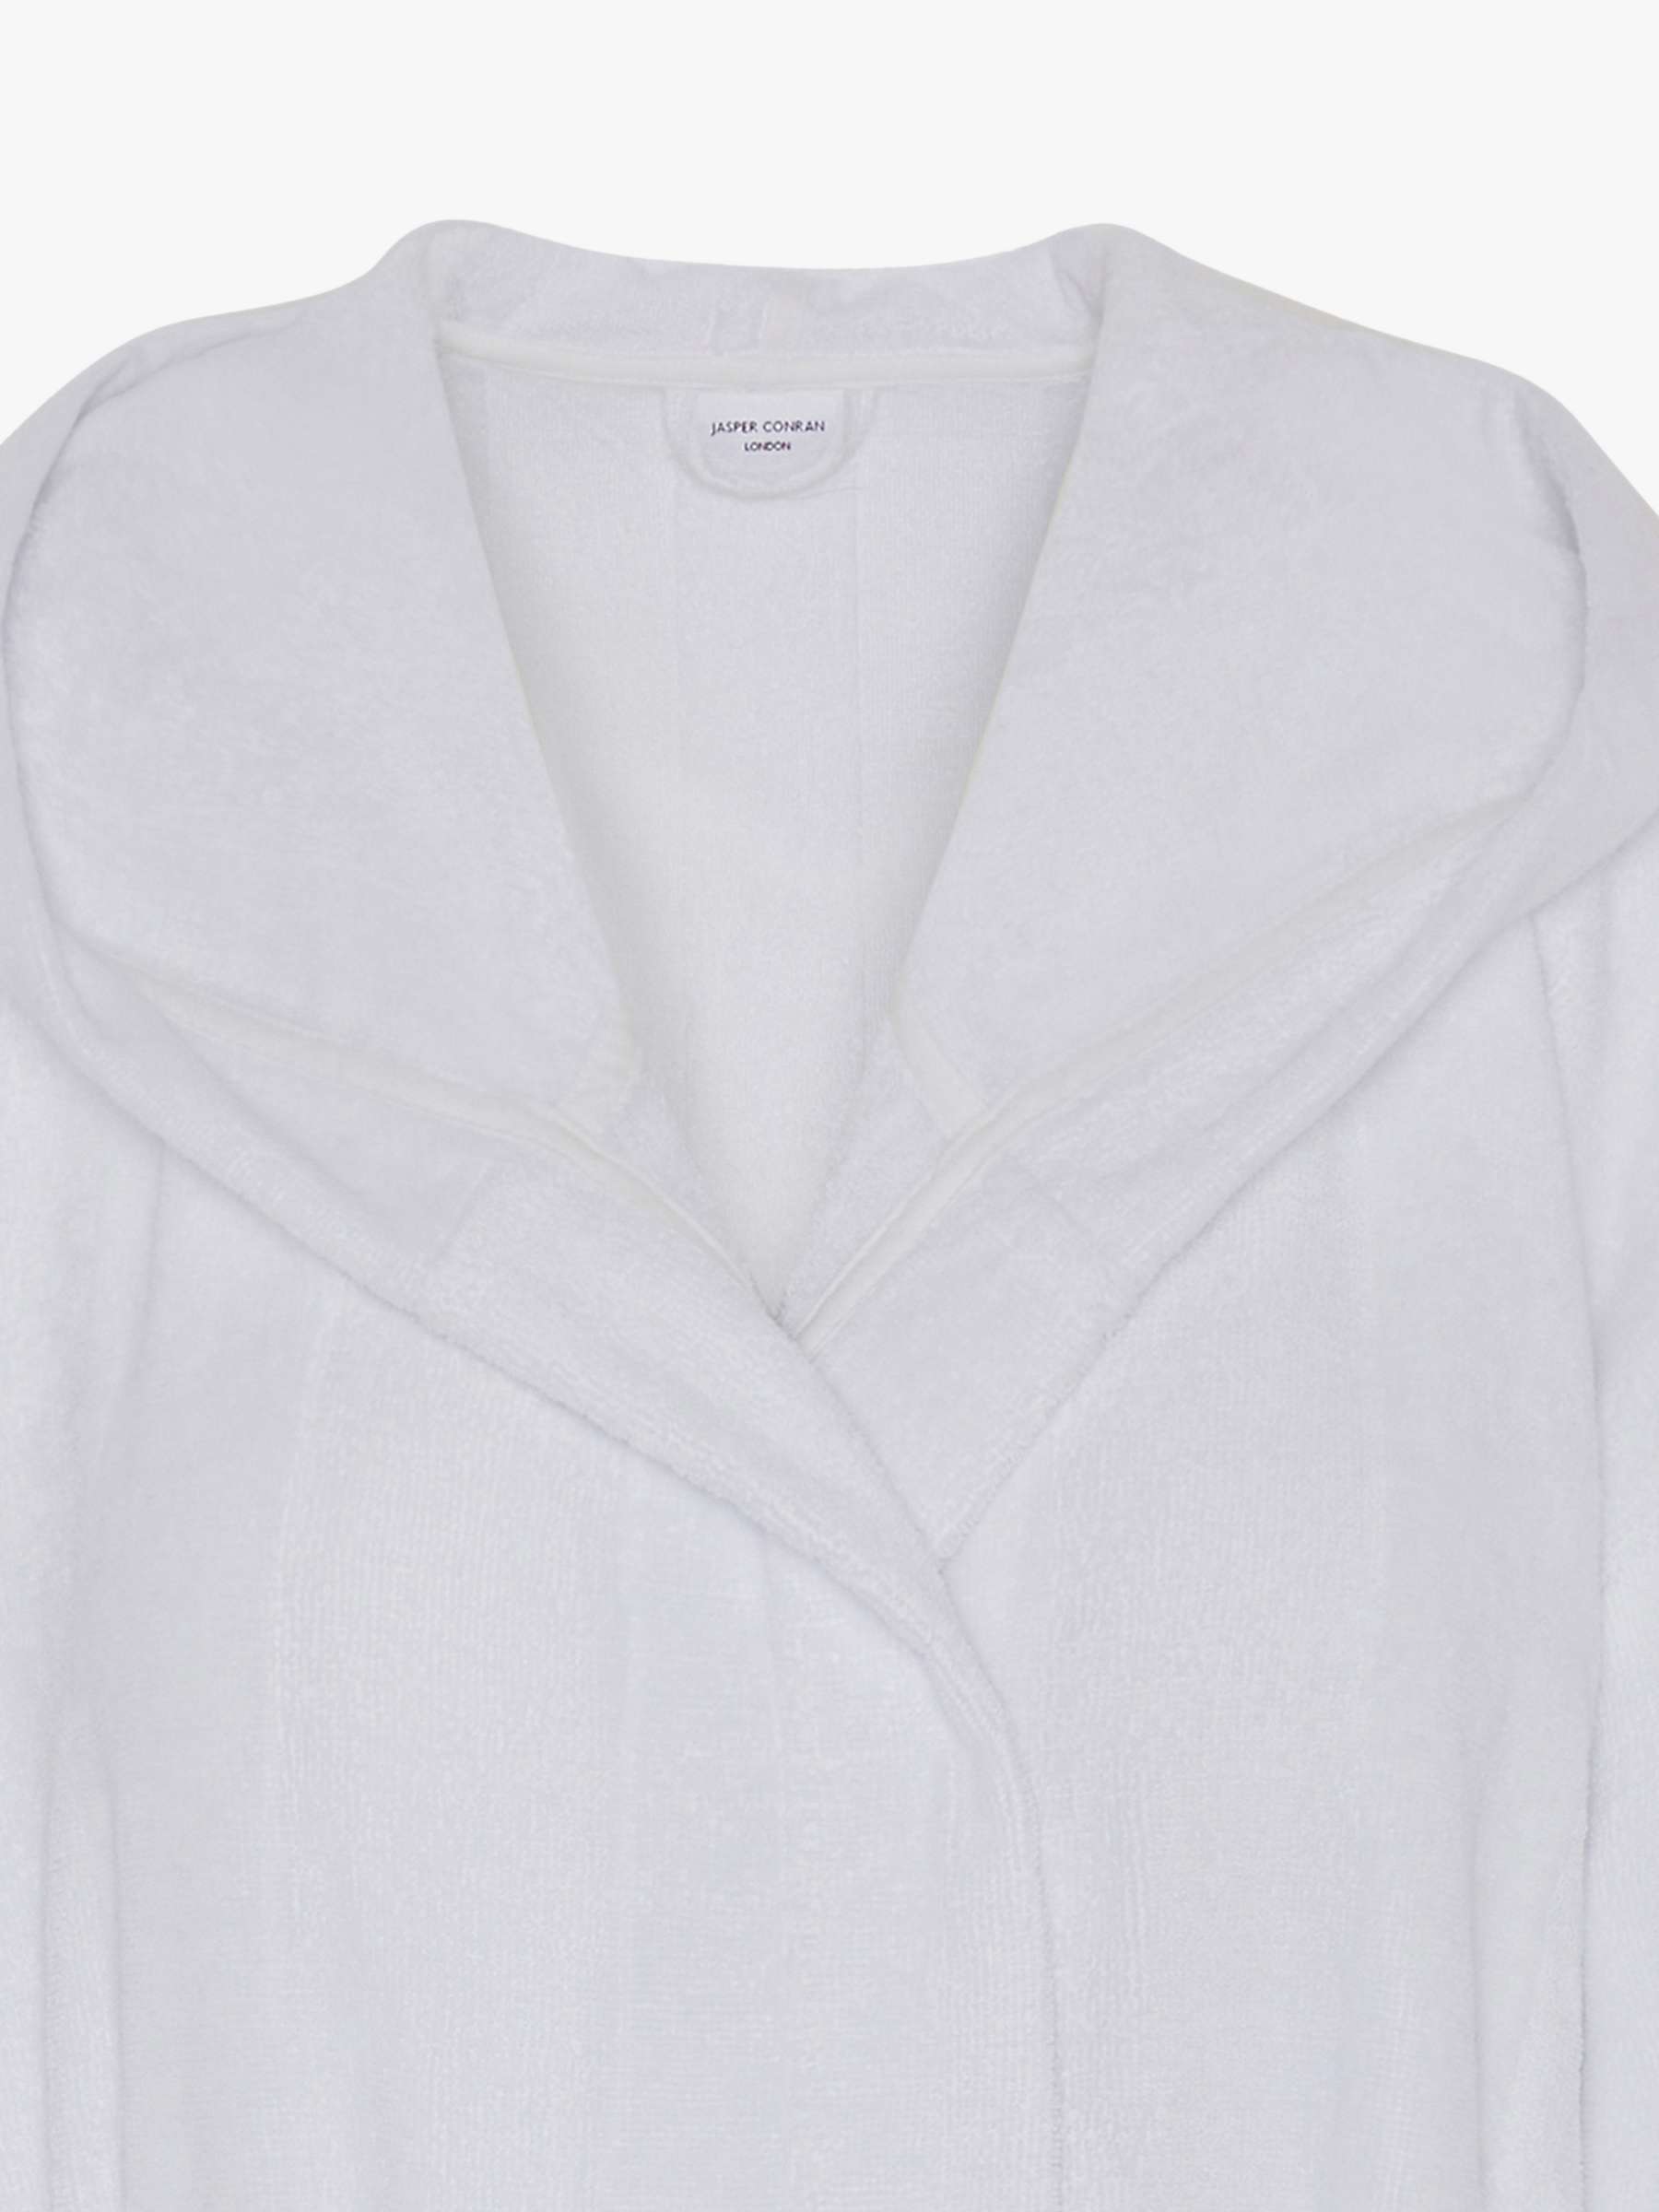 Buy Jasper Conran London Unisex Soft Lightweight Dressing Gown Online at johnlewis.com